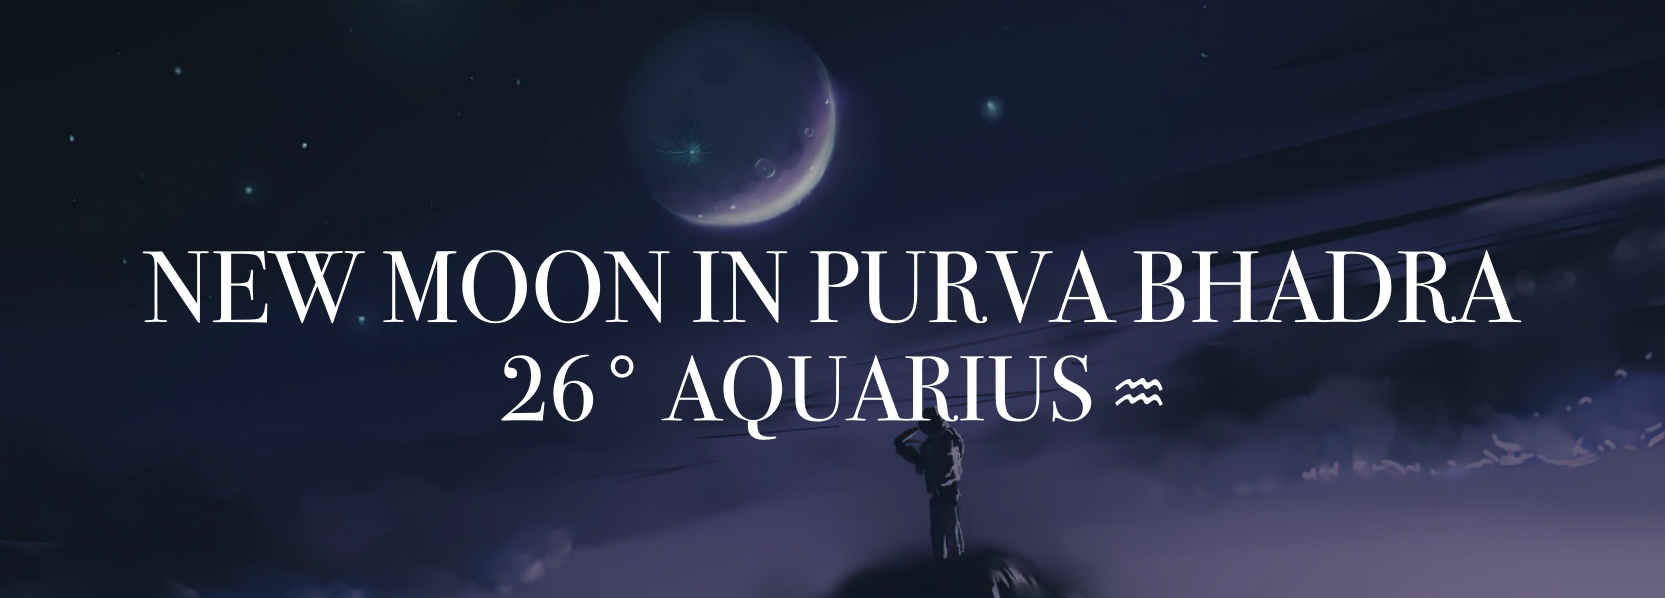 new moon in purva bhadrapada march 24